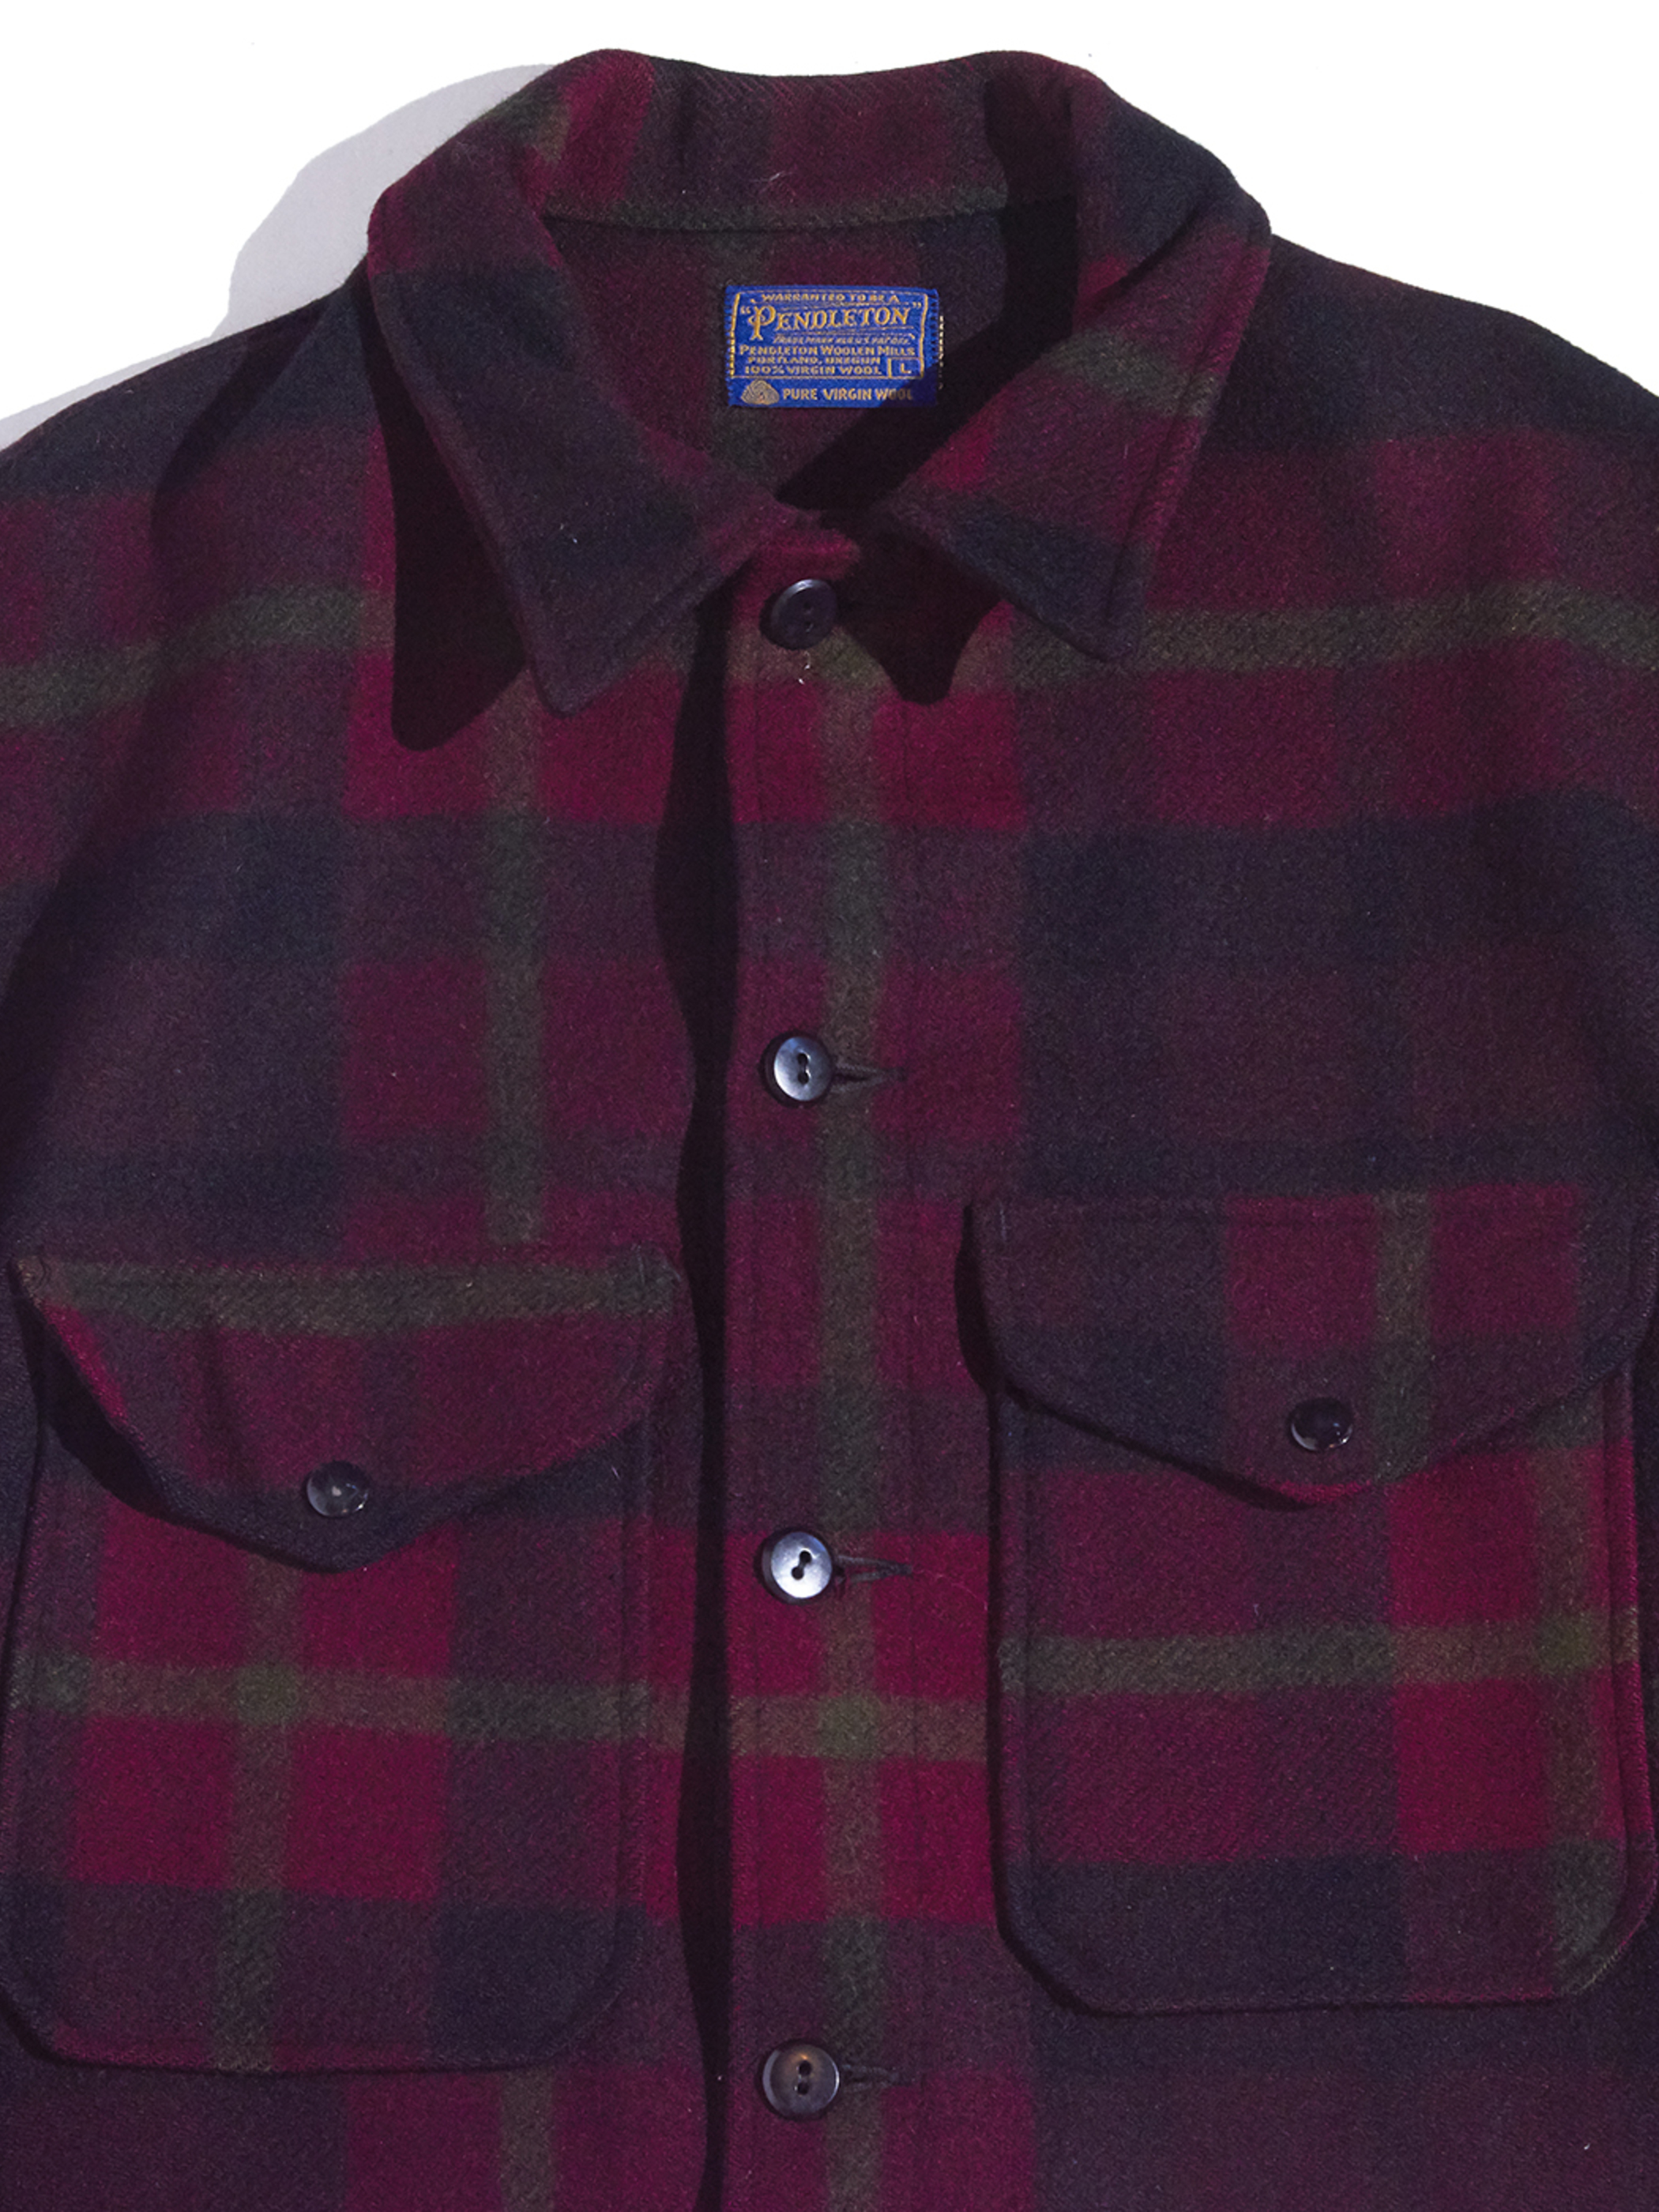 1960s "PENDLETON" wool check jac-shirt -BURGANDY-